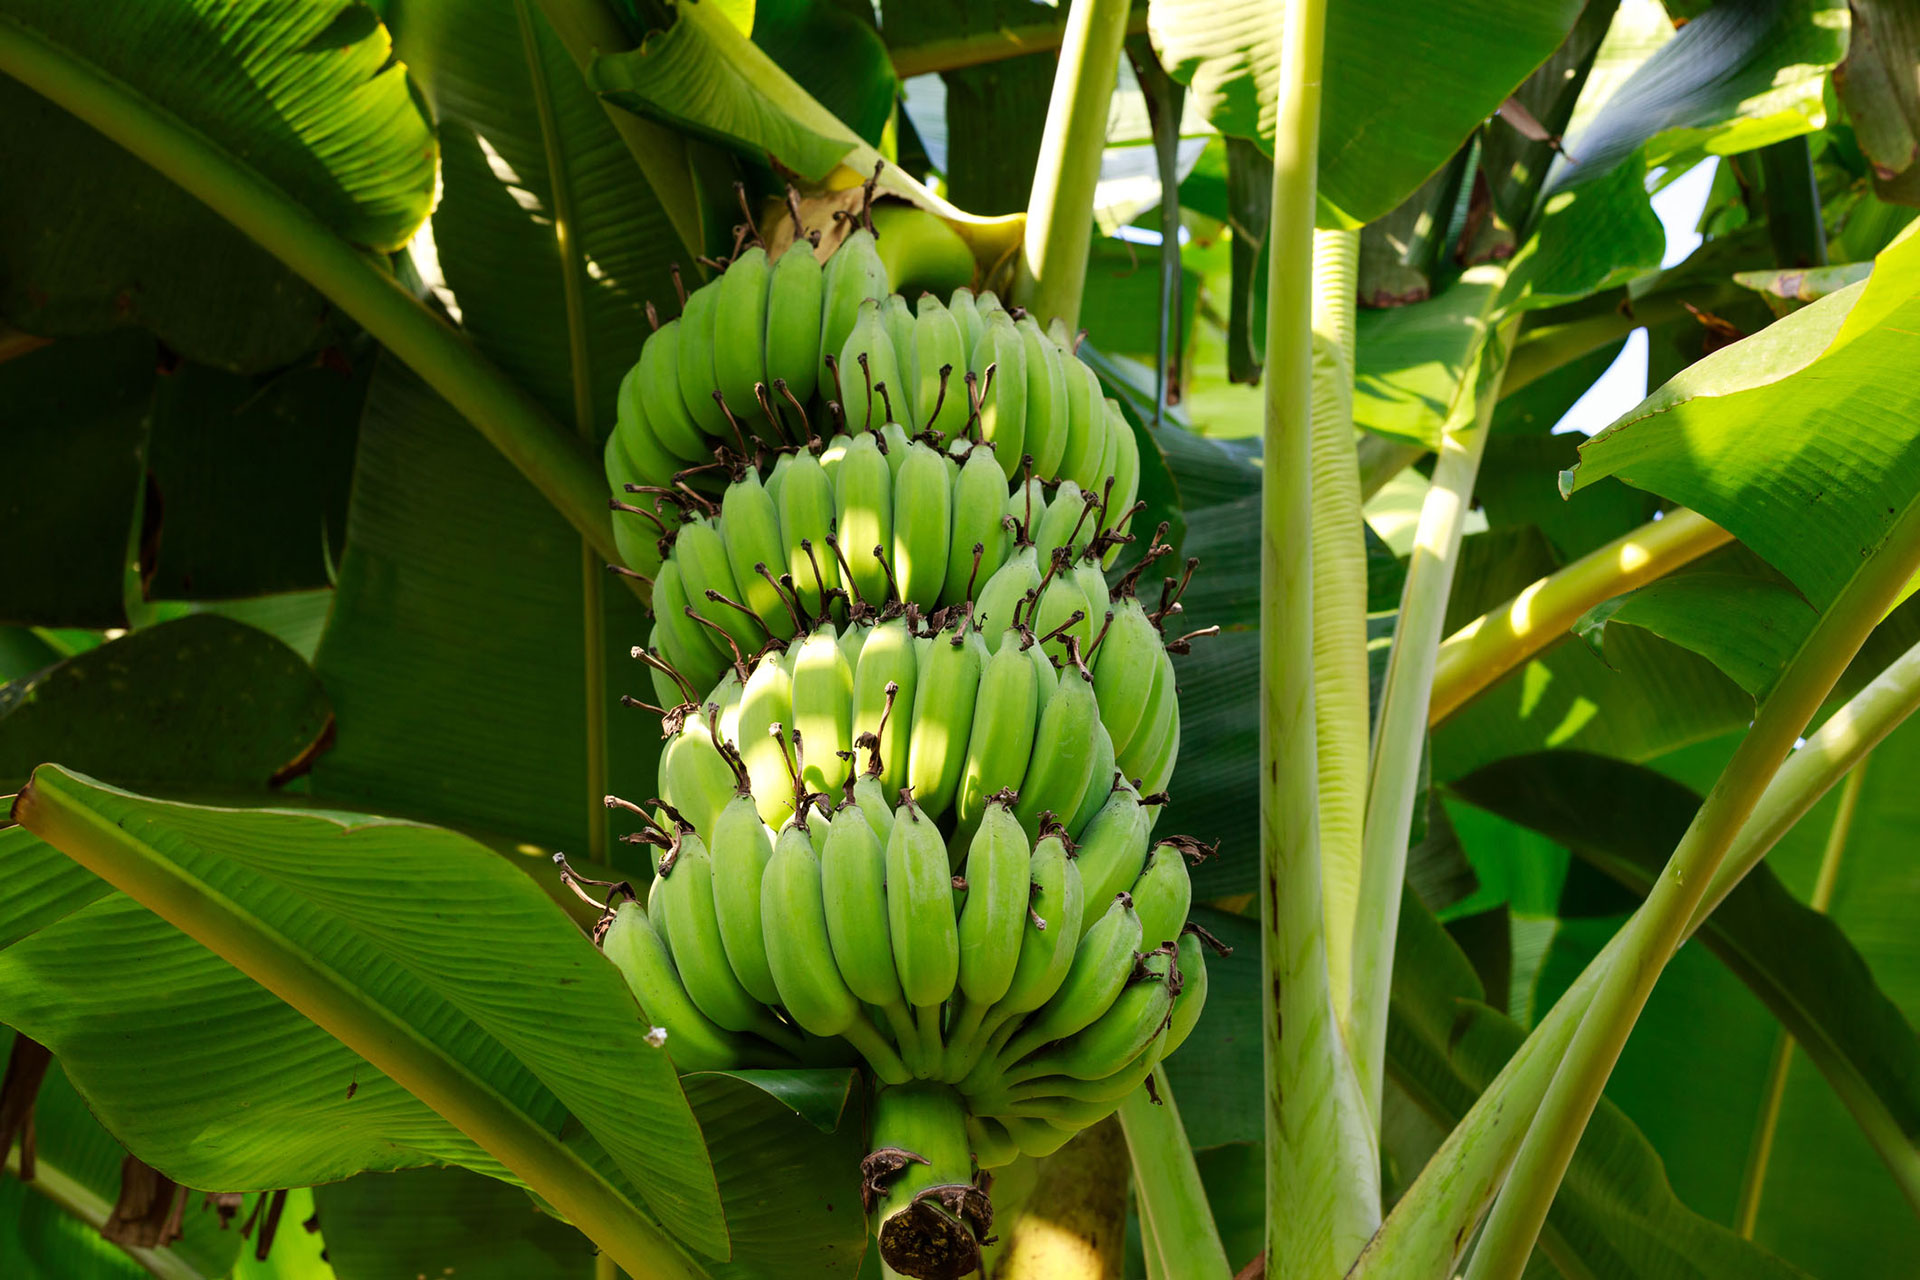 A branch of green bananas on a banana plant.